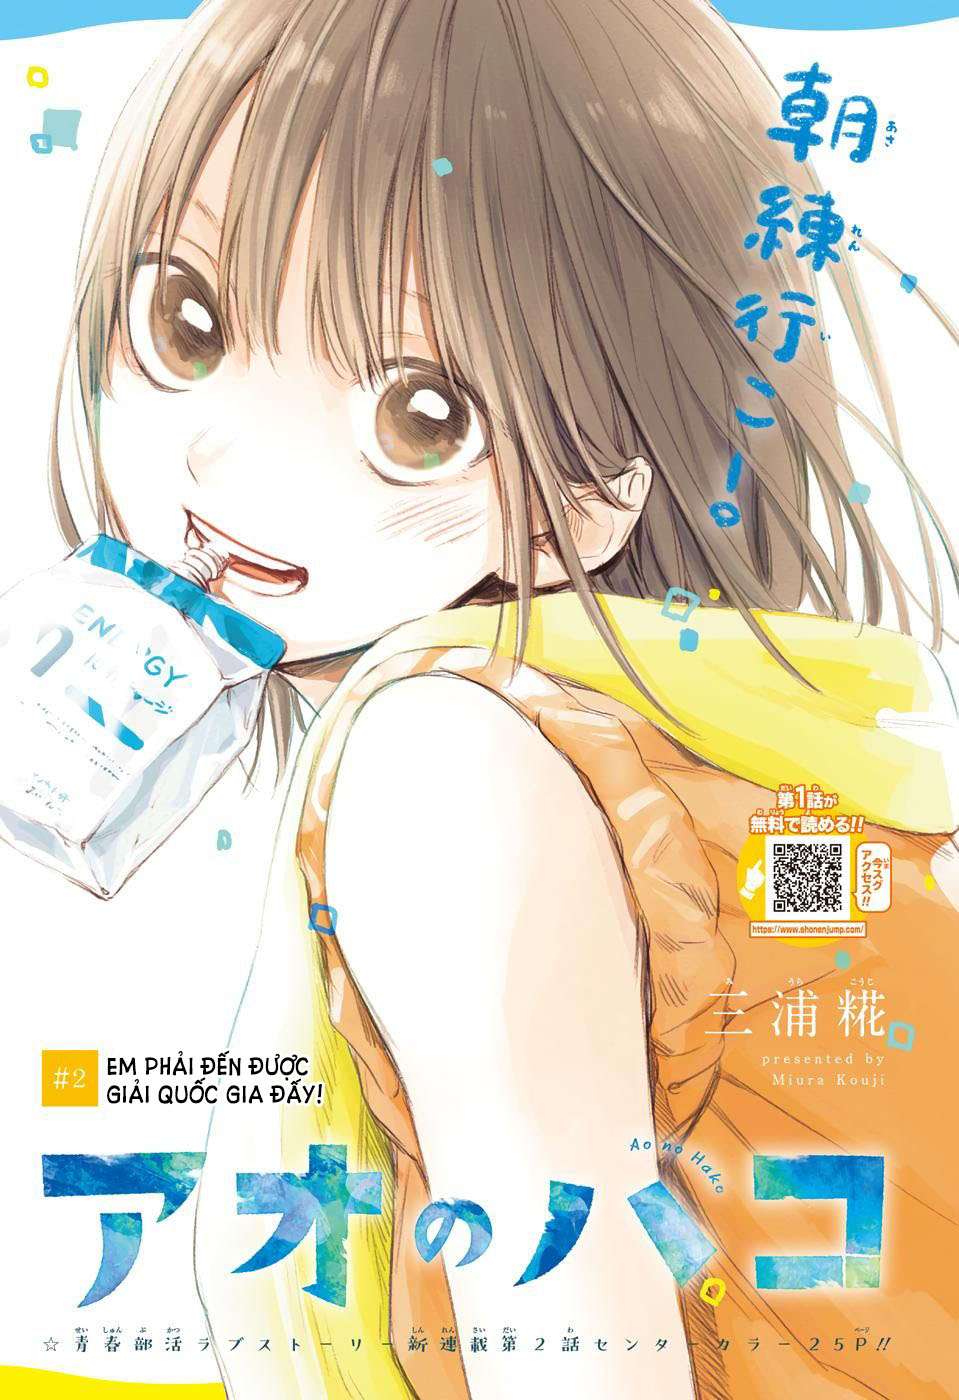 Ao no Hako / Blue Box Vol.1-8 set Japanese Manga Comic Book | eBay